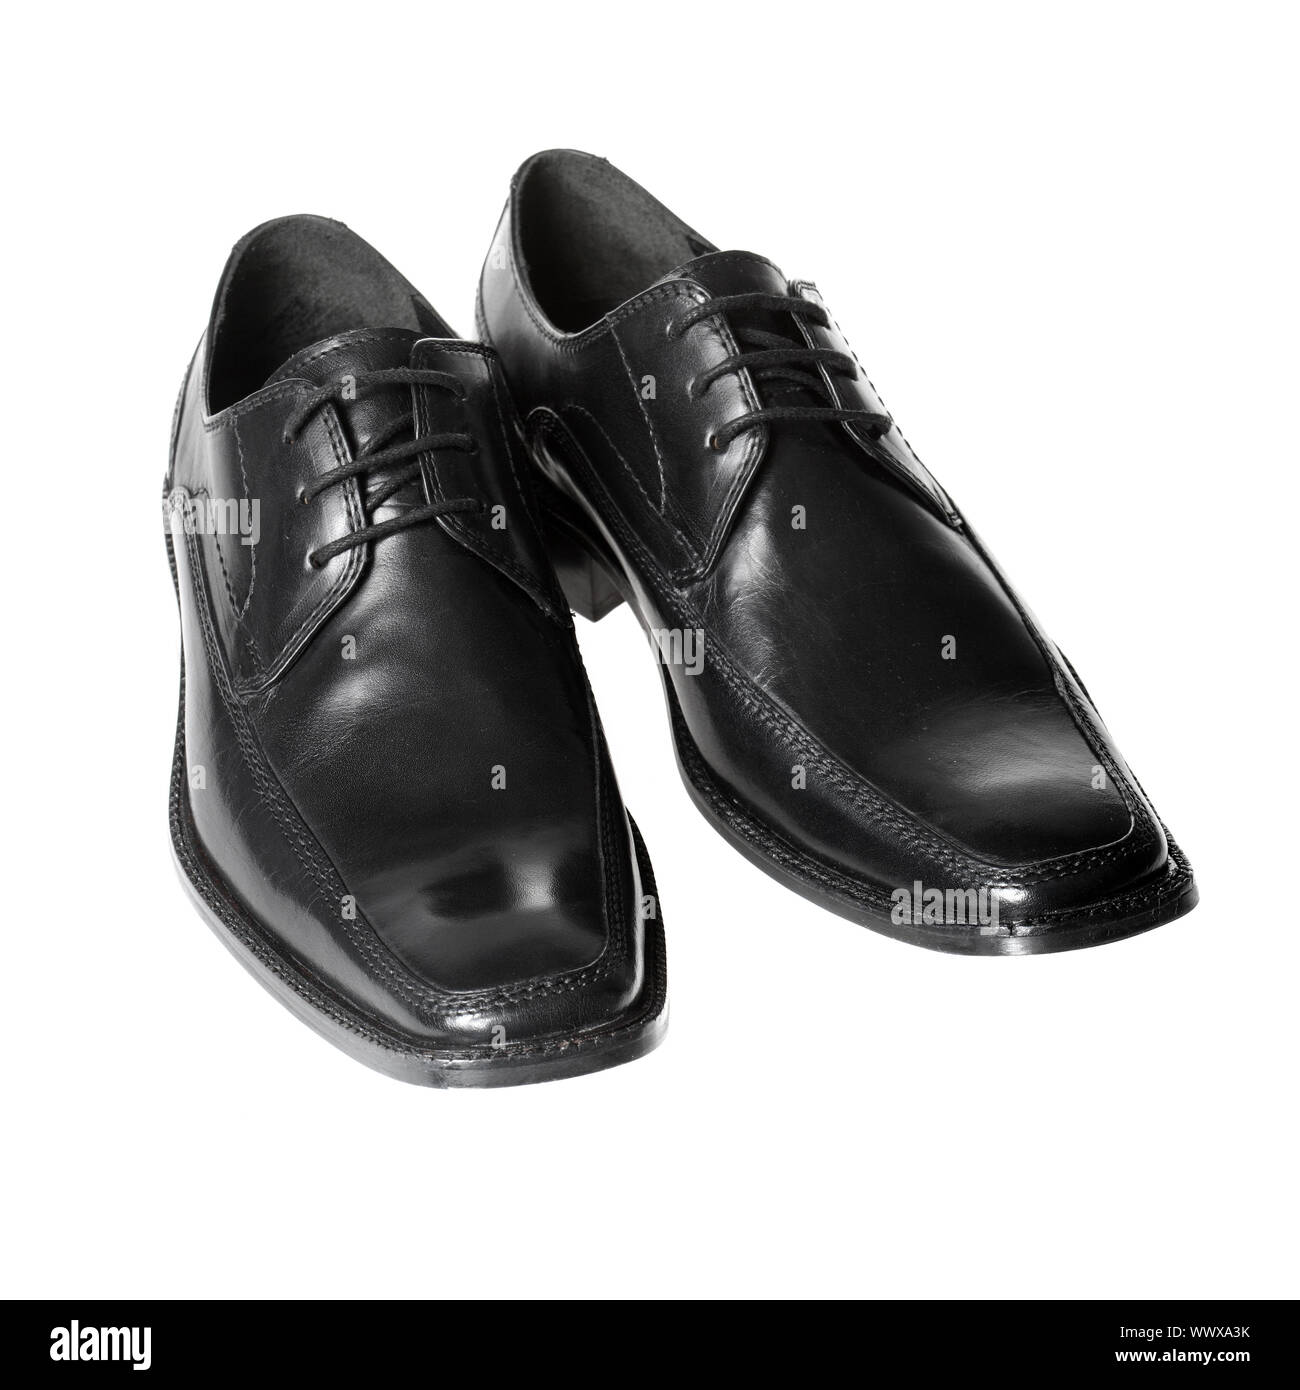 Black men's dress shoes, isolated Stock Photo - Alamy